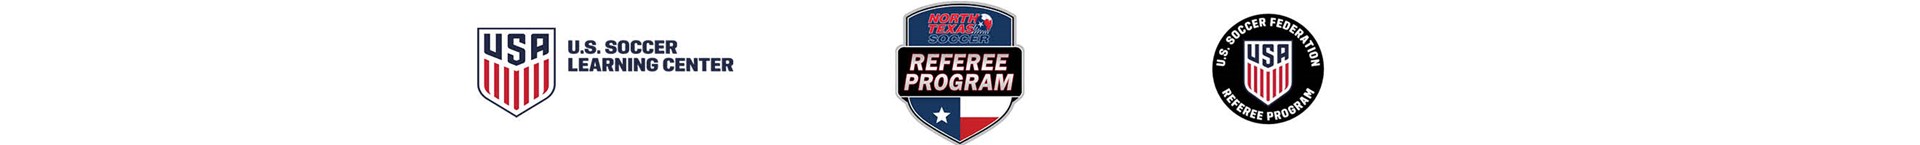 Referee_Logo_Banner6